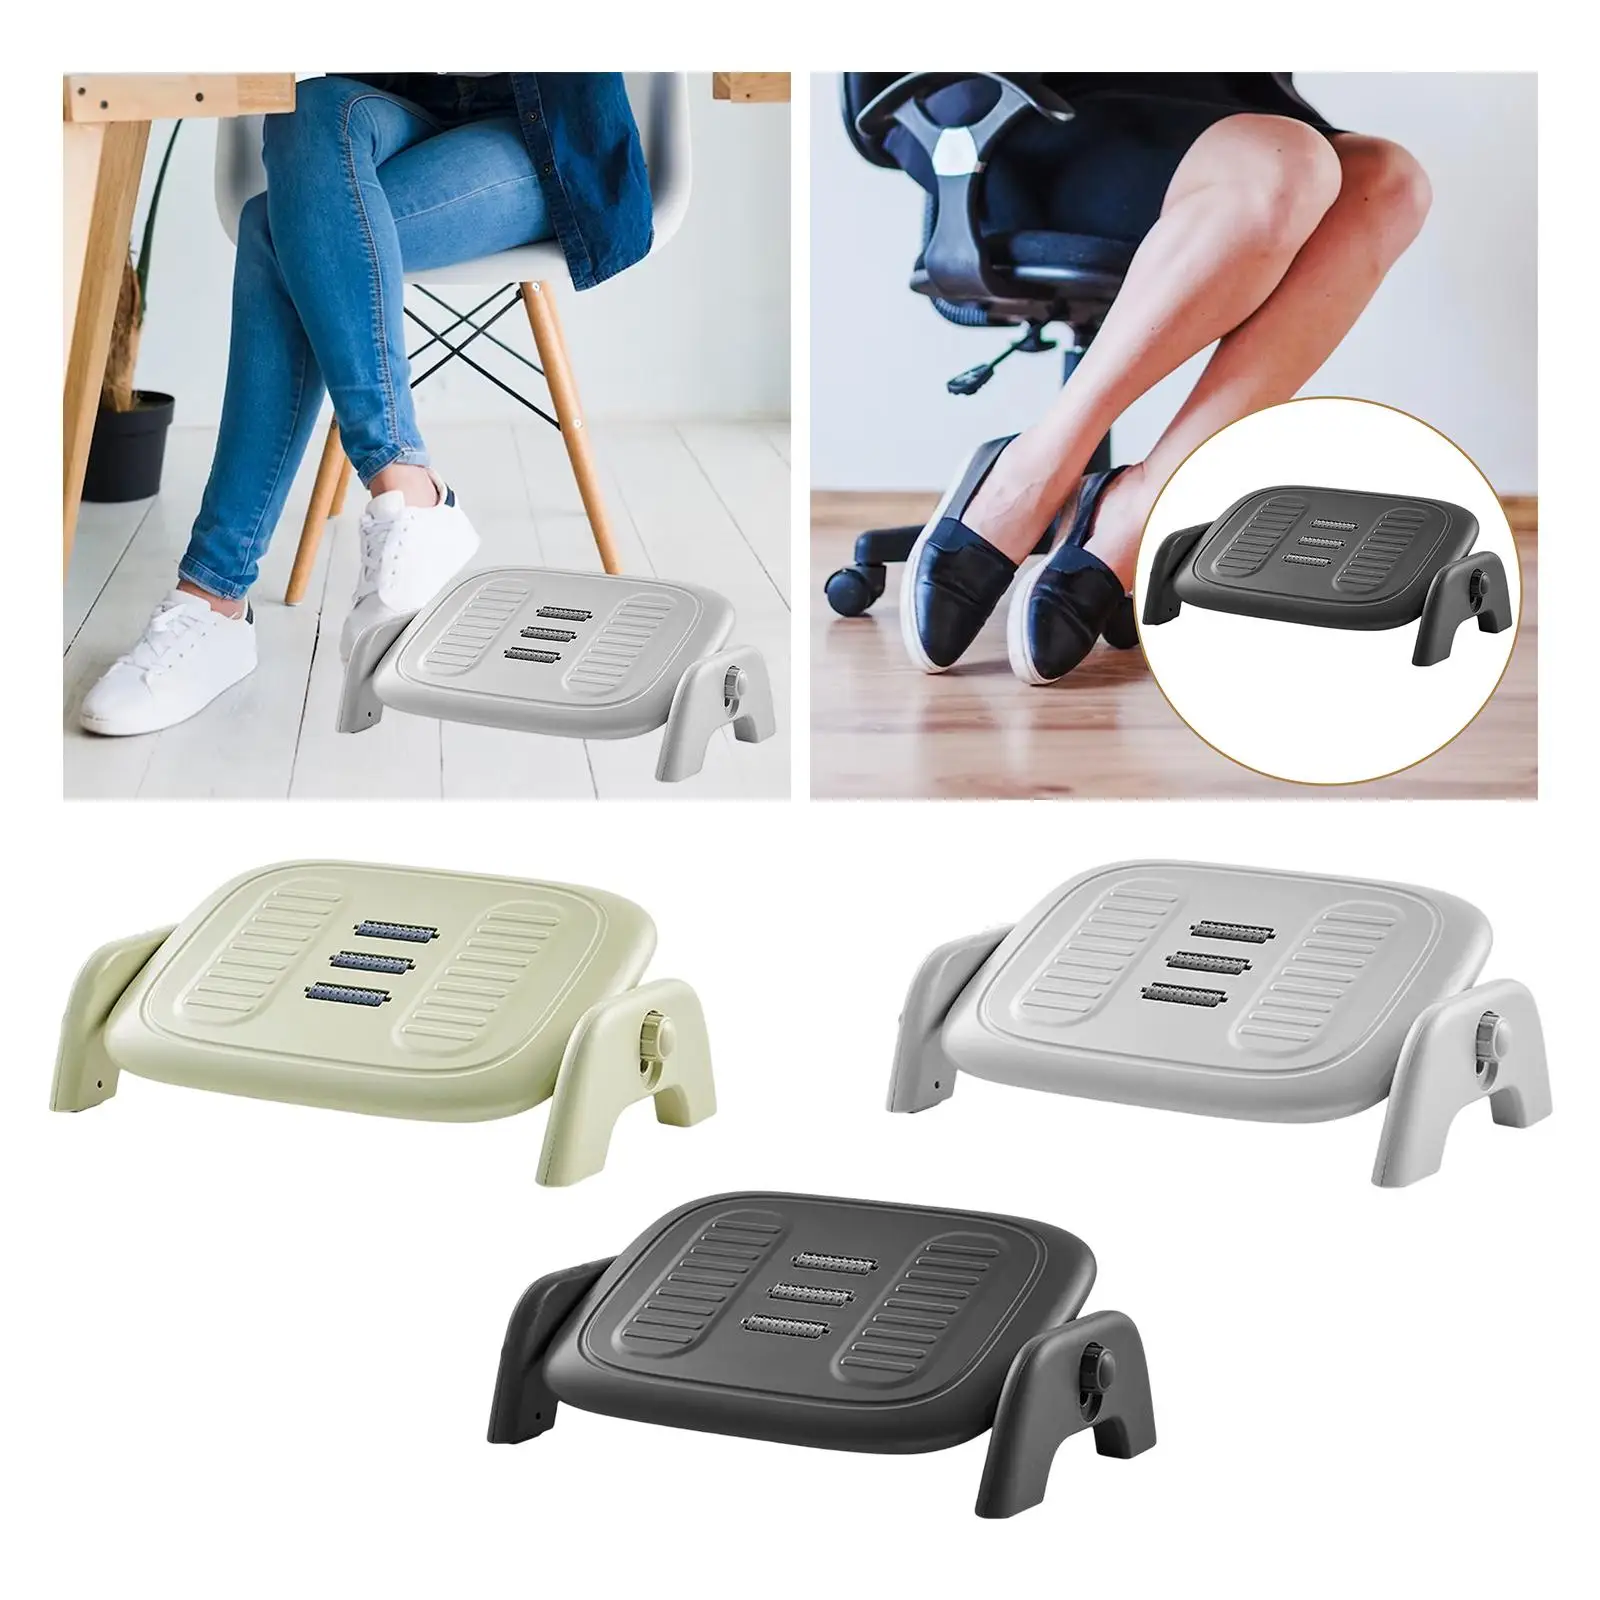 Ergonomic Foot Rest with Massage Function Non Skid Height Adjustable Adjustable Footrest Foot Rest for Home Plane Travel Work